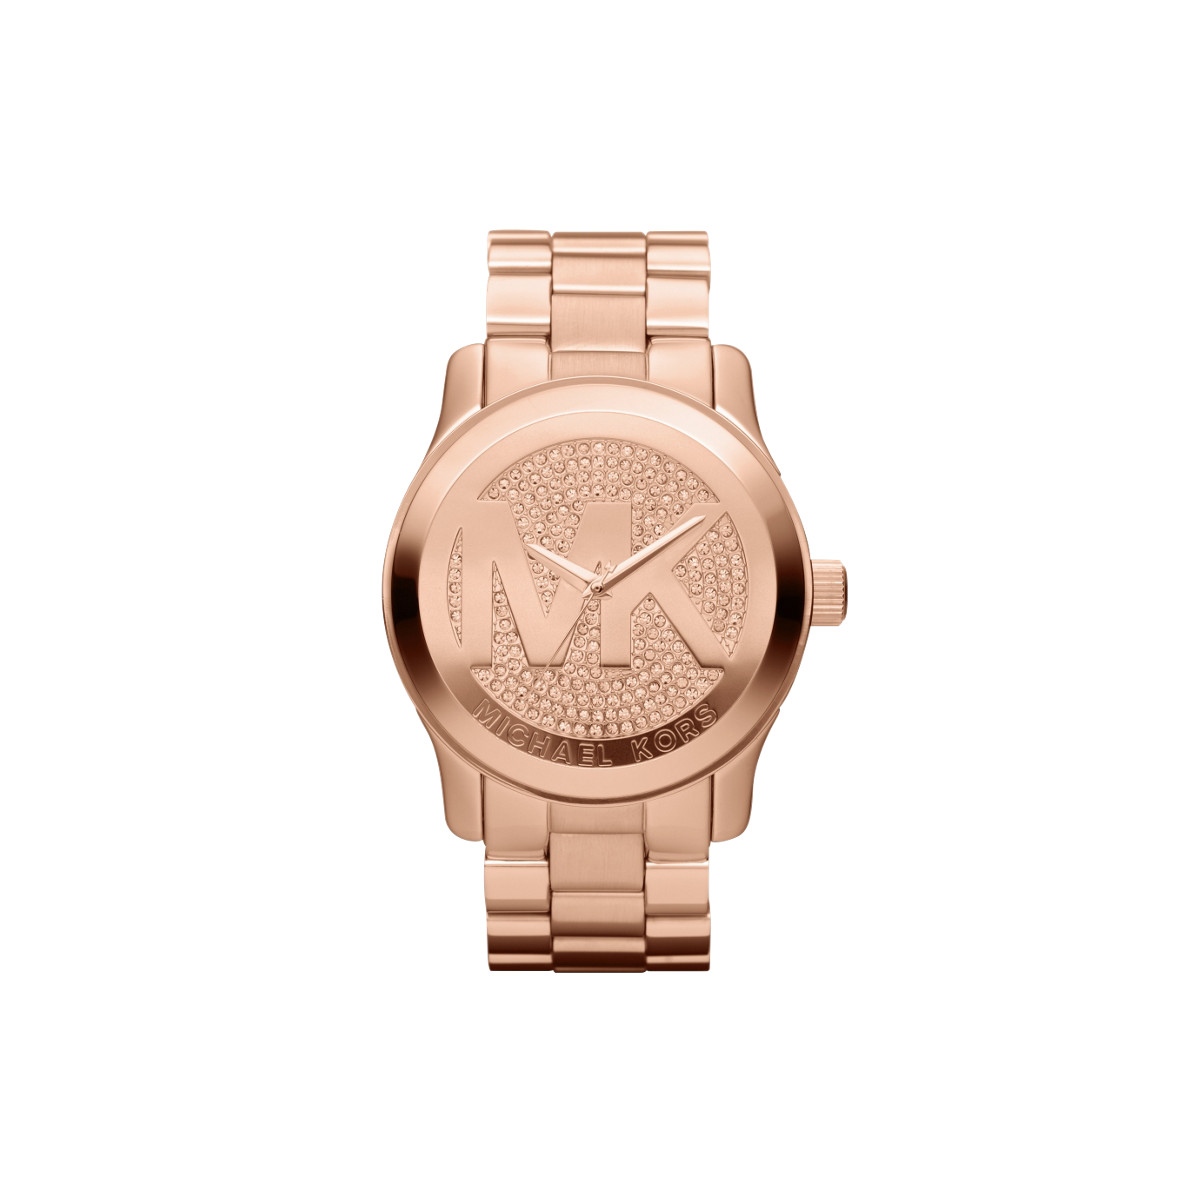 Женские часы - часы Michael Kors MK5661